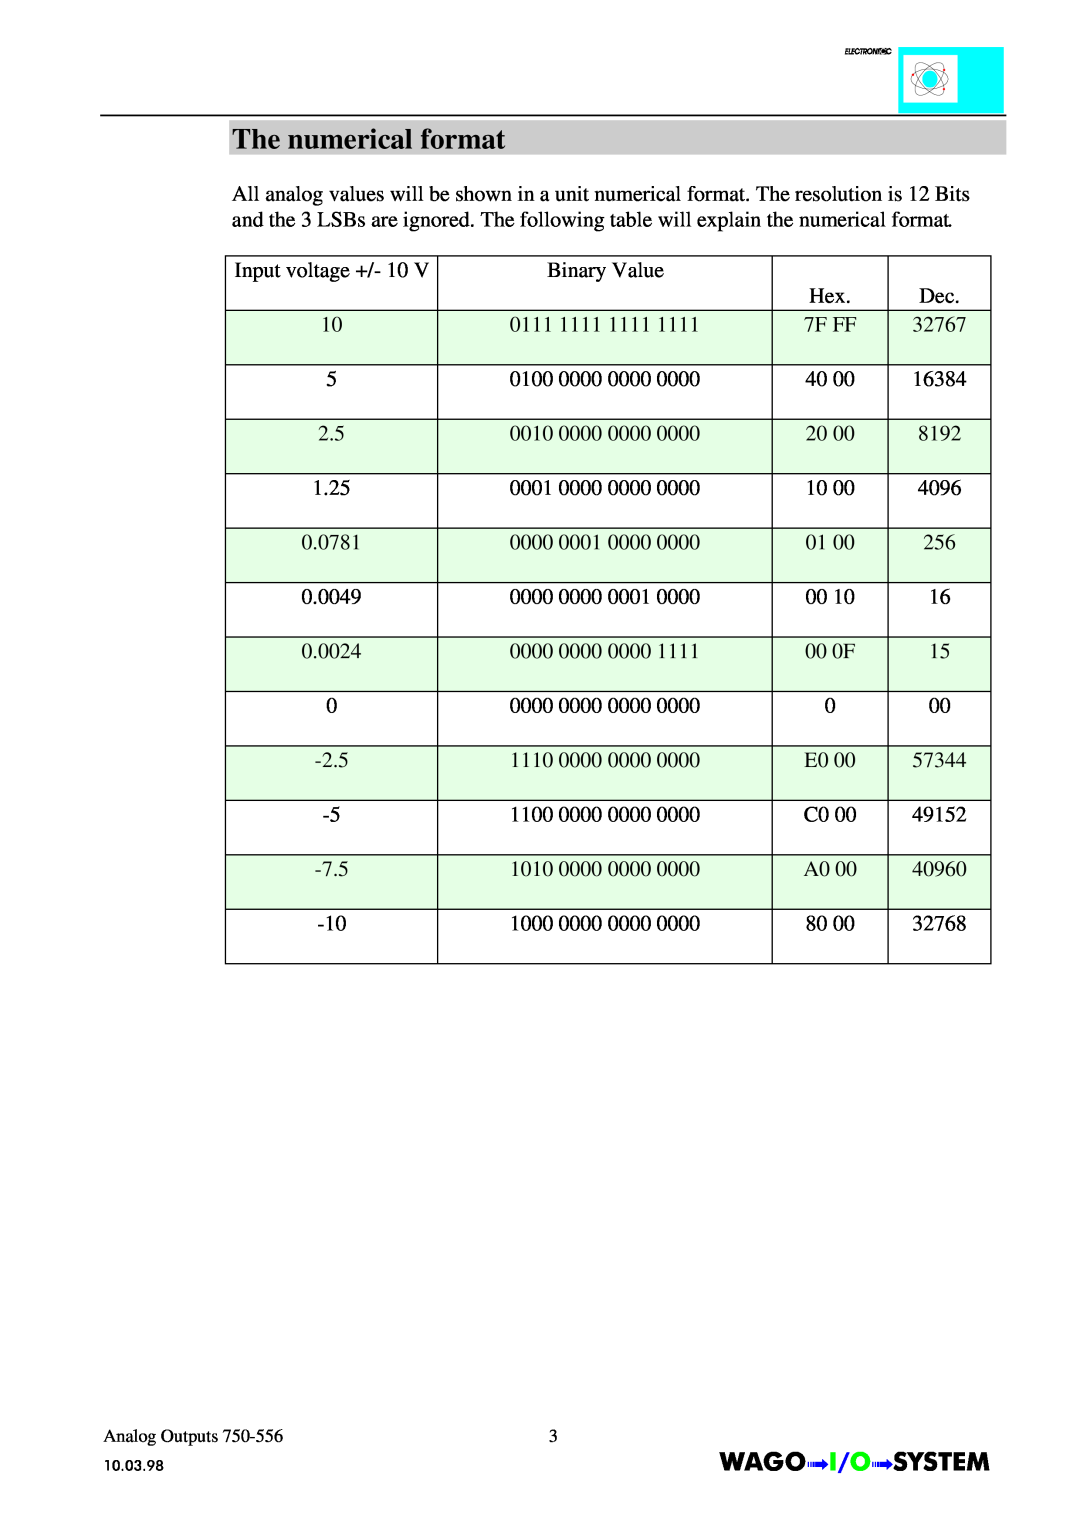 Quatech INTERBUS S manual The numerical format, 7F FF 